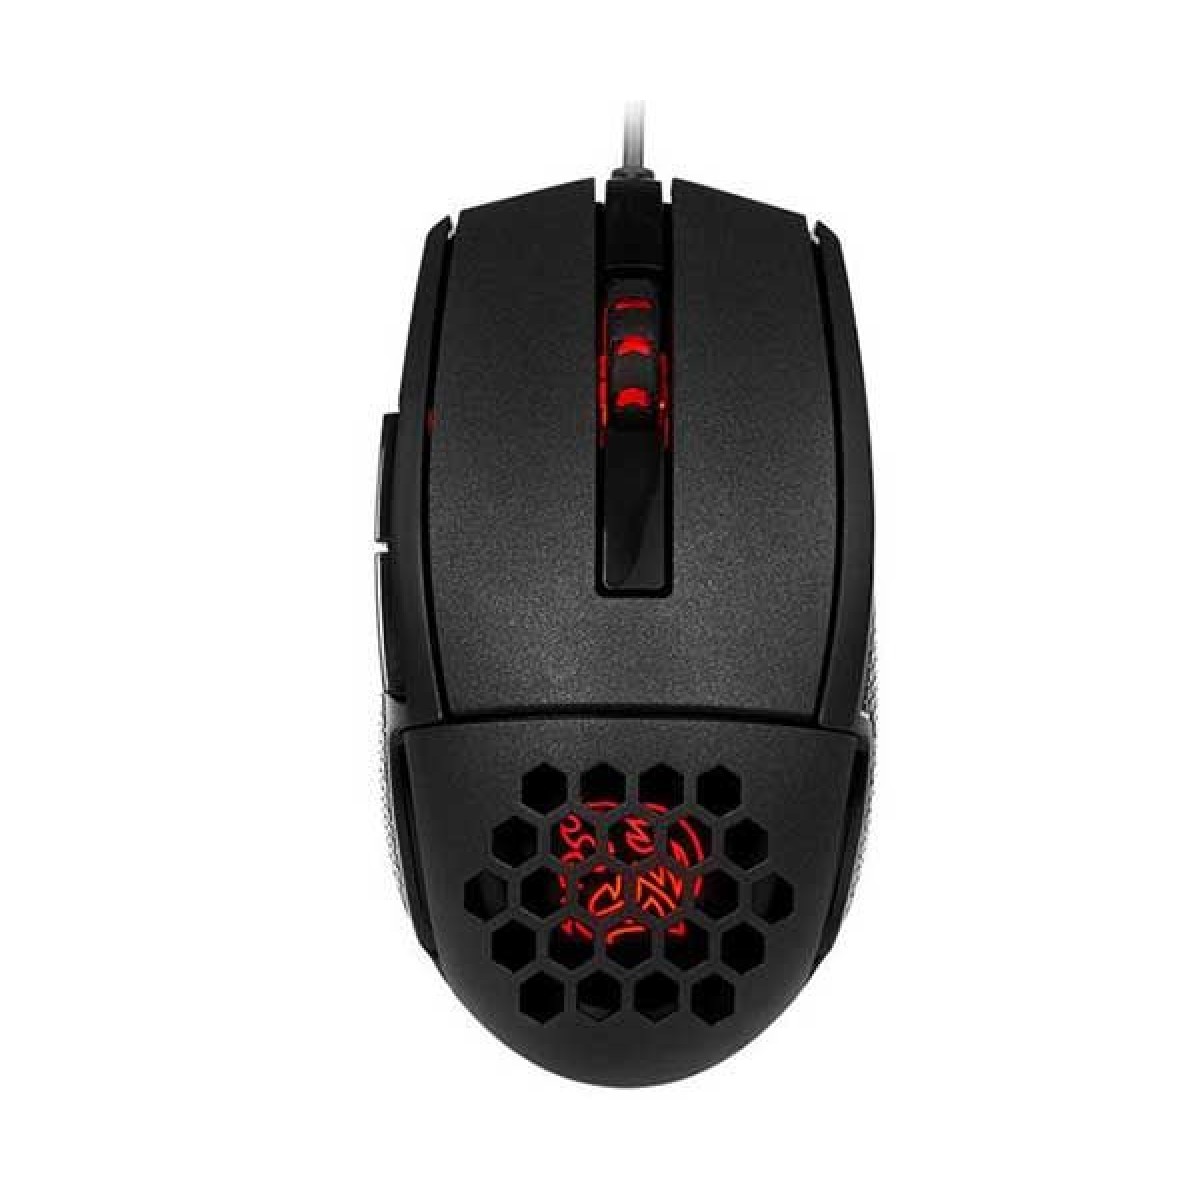 Mouse Gamer Thermaltake eSports Ventus R, 5000 DPI, RGB, 5 Botões, Black, MO-VER-WDOOBK-01